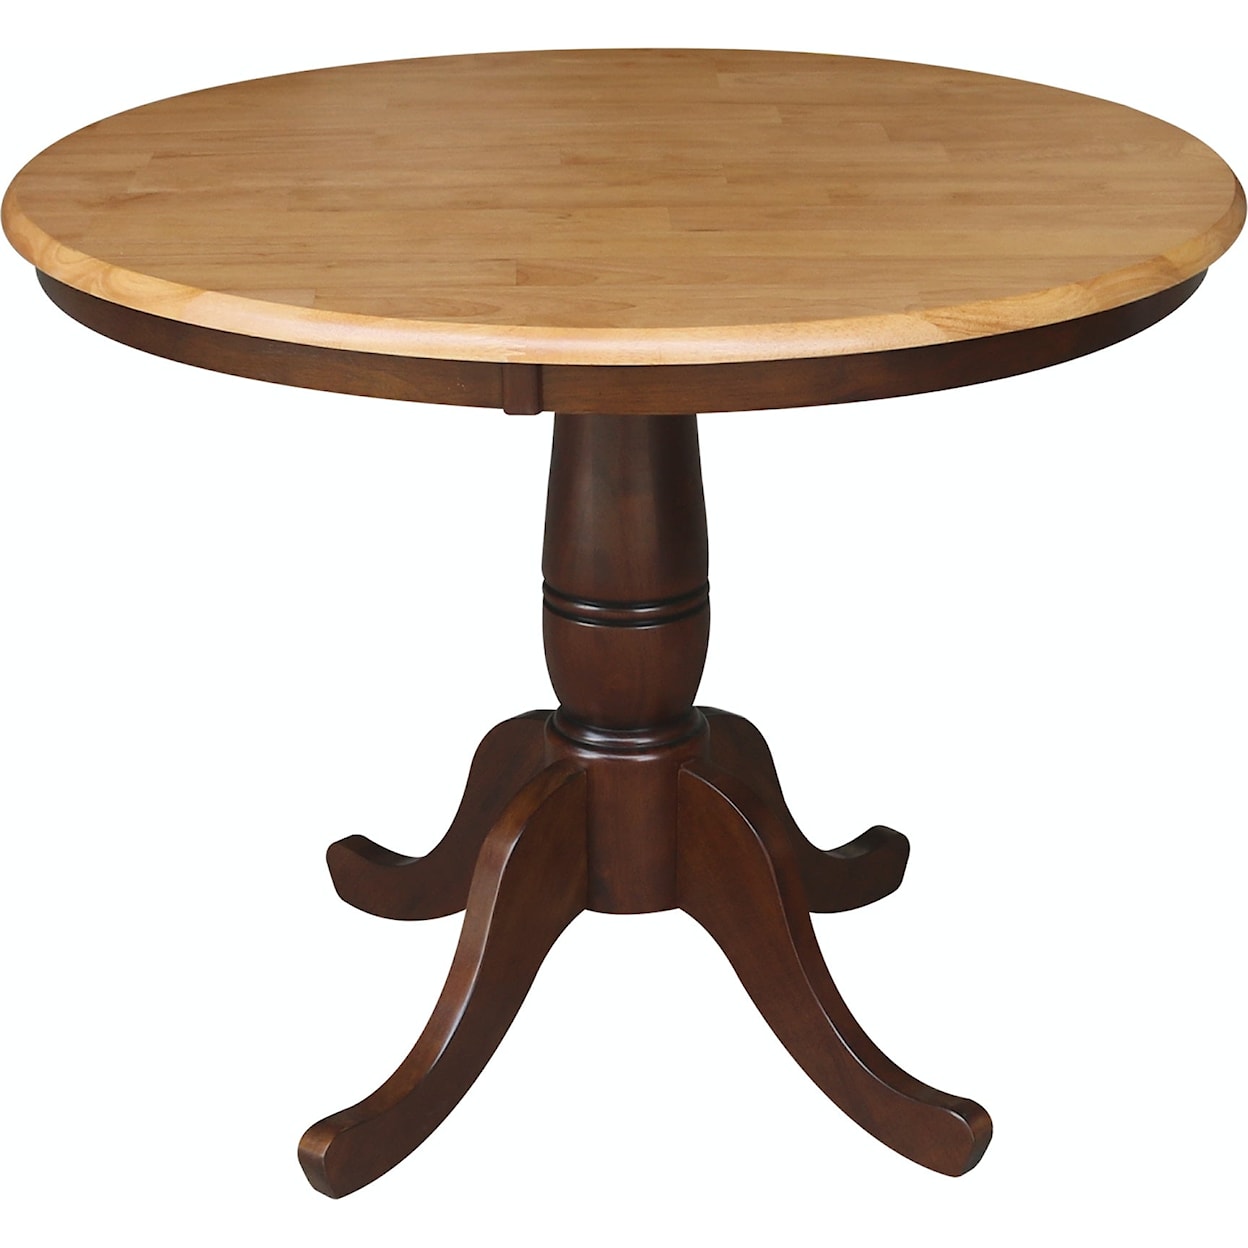 John Thomas Dining Essentials 36'' Pedestal Table in Cinnamon / Espresso